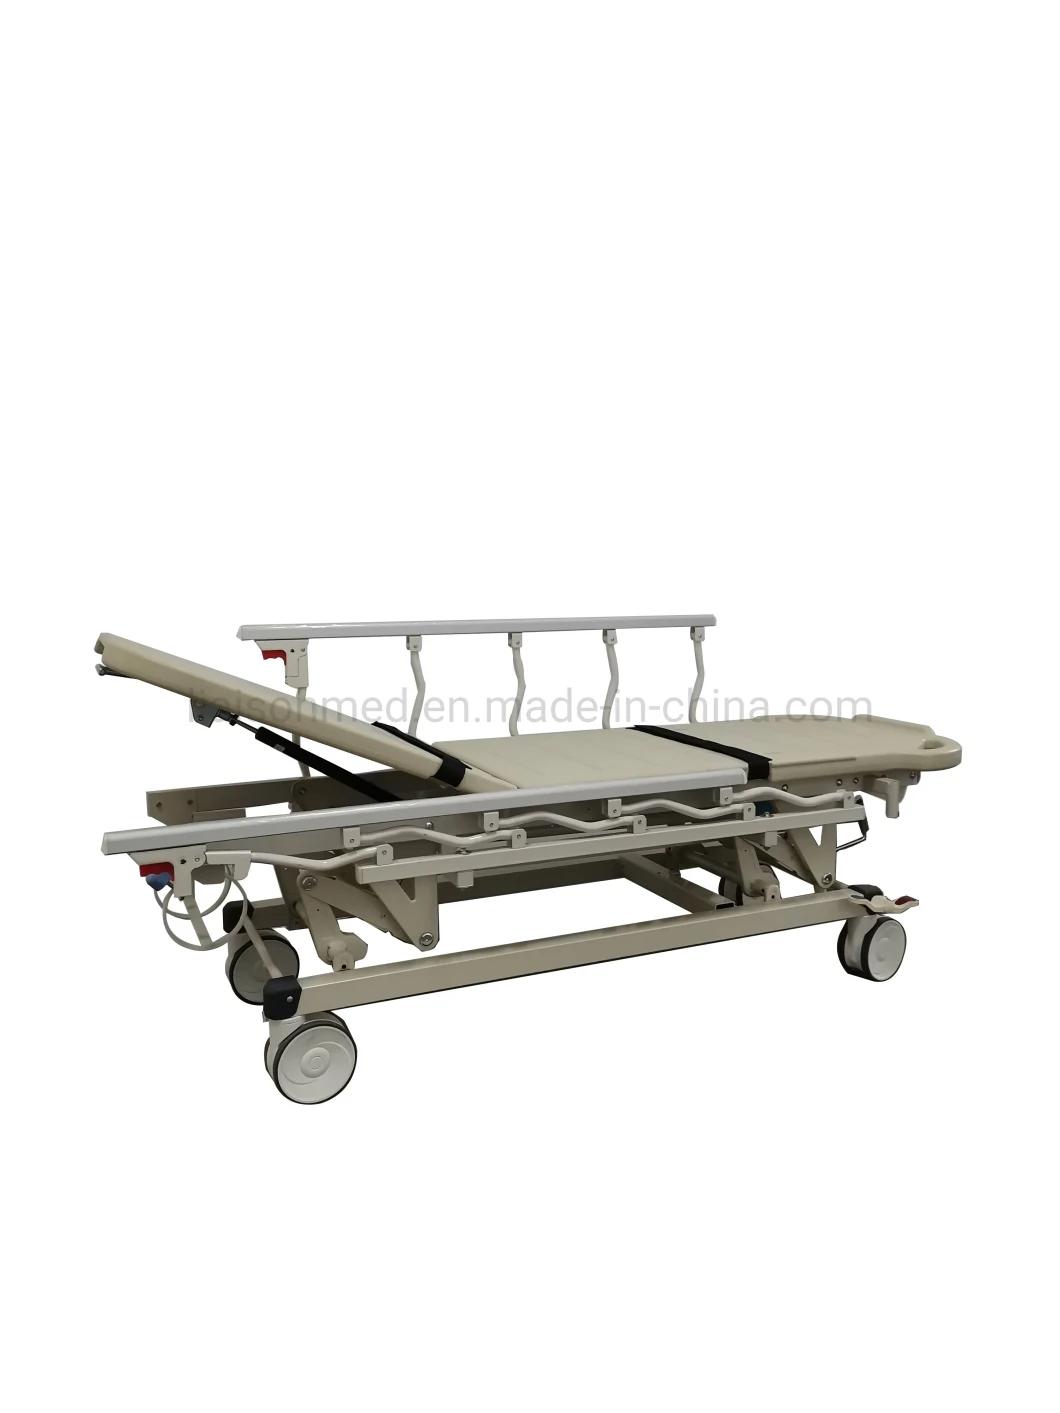 Mn-SD006 Multi-Function Foam Mattress Hospital Aluminum Emergency Patient Ambulance Stretcher